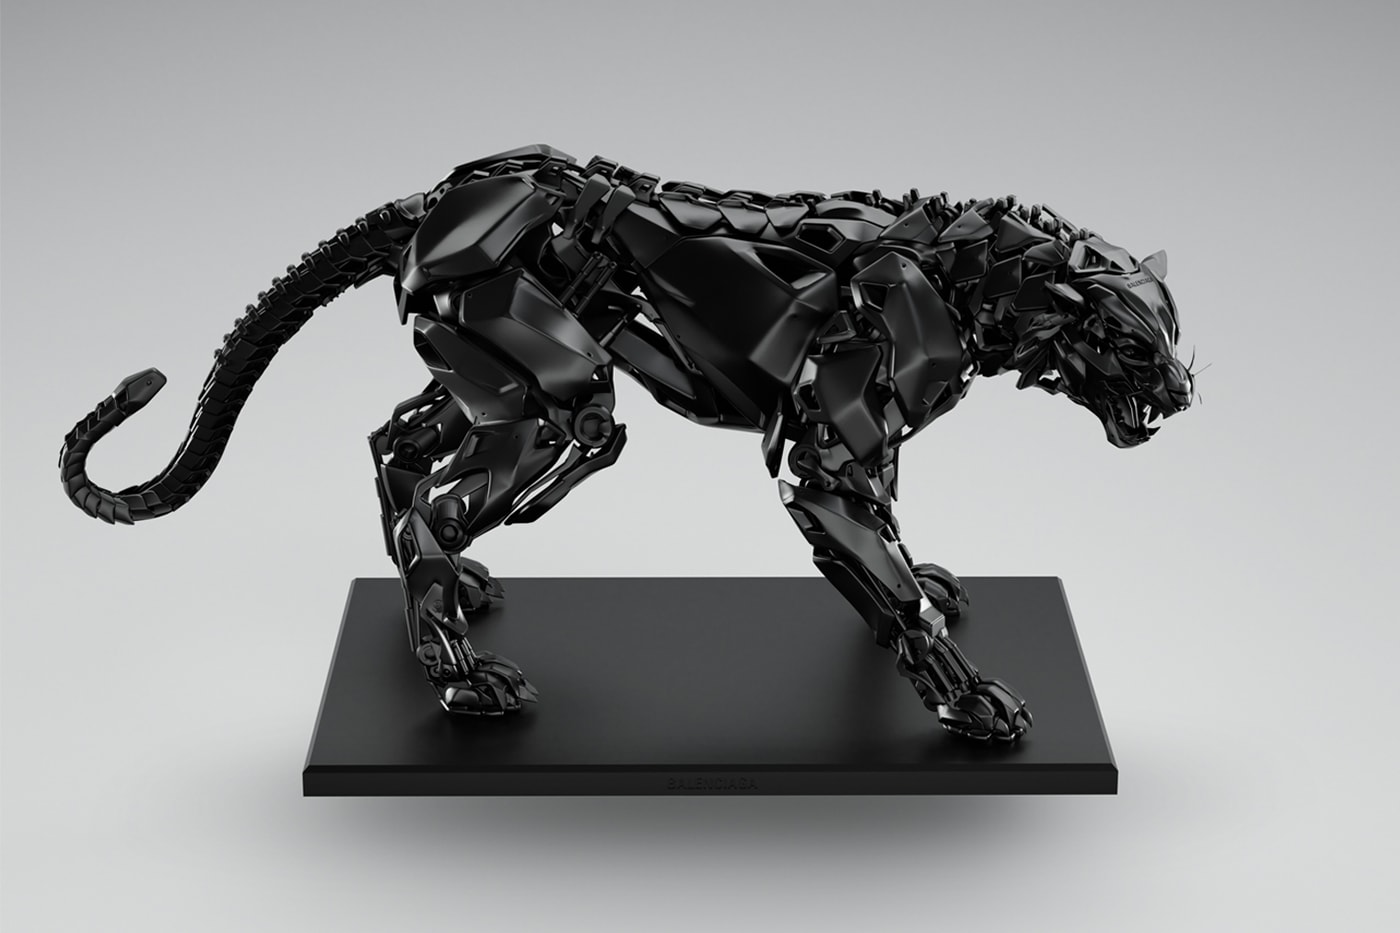 Balenciaga Releases Tiger Sculpture in Black Objects black brass gloss mechanical platform futuristic nik kosmas release info price display